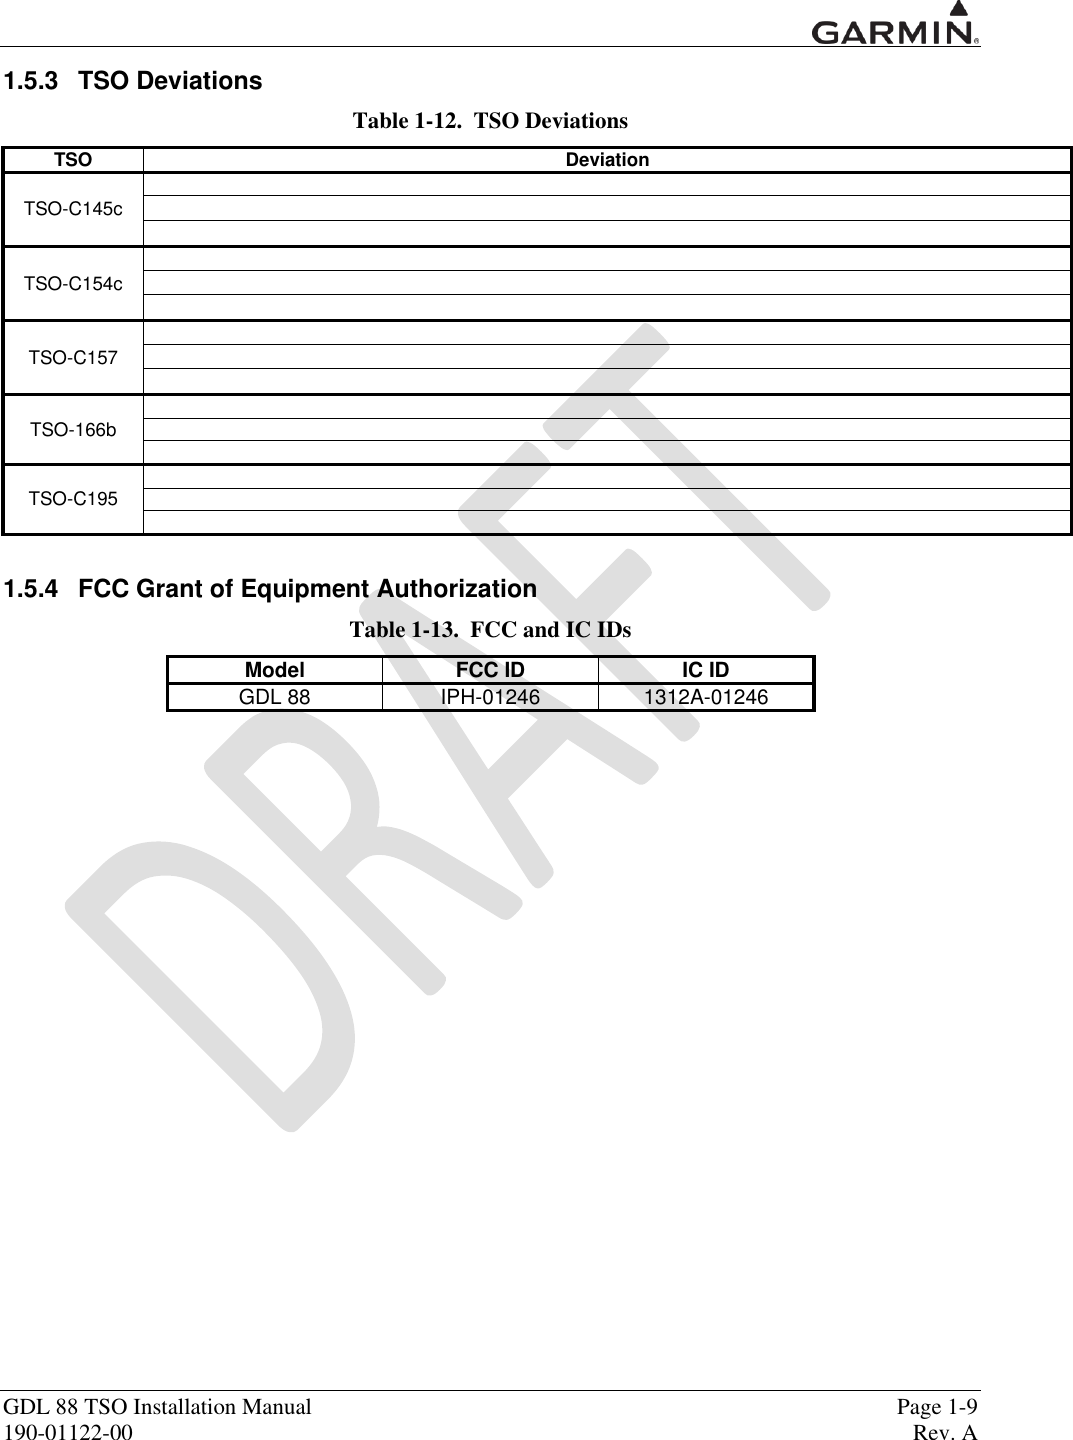  GDL 88 TSO Installation Manual    Page 1-9 190-01122-00  Rev. A  1.5.3  TSO Deviations Table 1-12.  TSO Deviations TSO Deviation TSO-C145c    TSO-C154c    TSO-C157    TSO-166b    TSO-C195     1.5.4  FCC Grant of Equipment Authorization Table 1-13.  FCC and IC IDs Model FCC ID IC ID GDL 88 IPH-01246 1312A-01246   